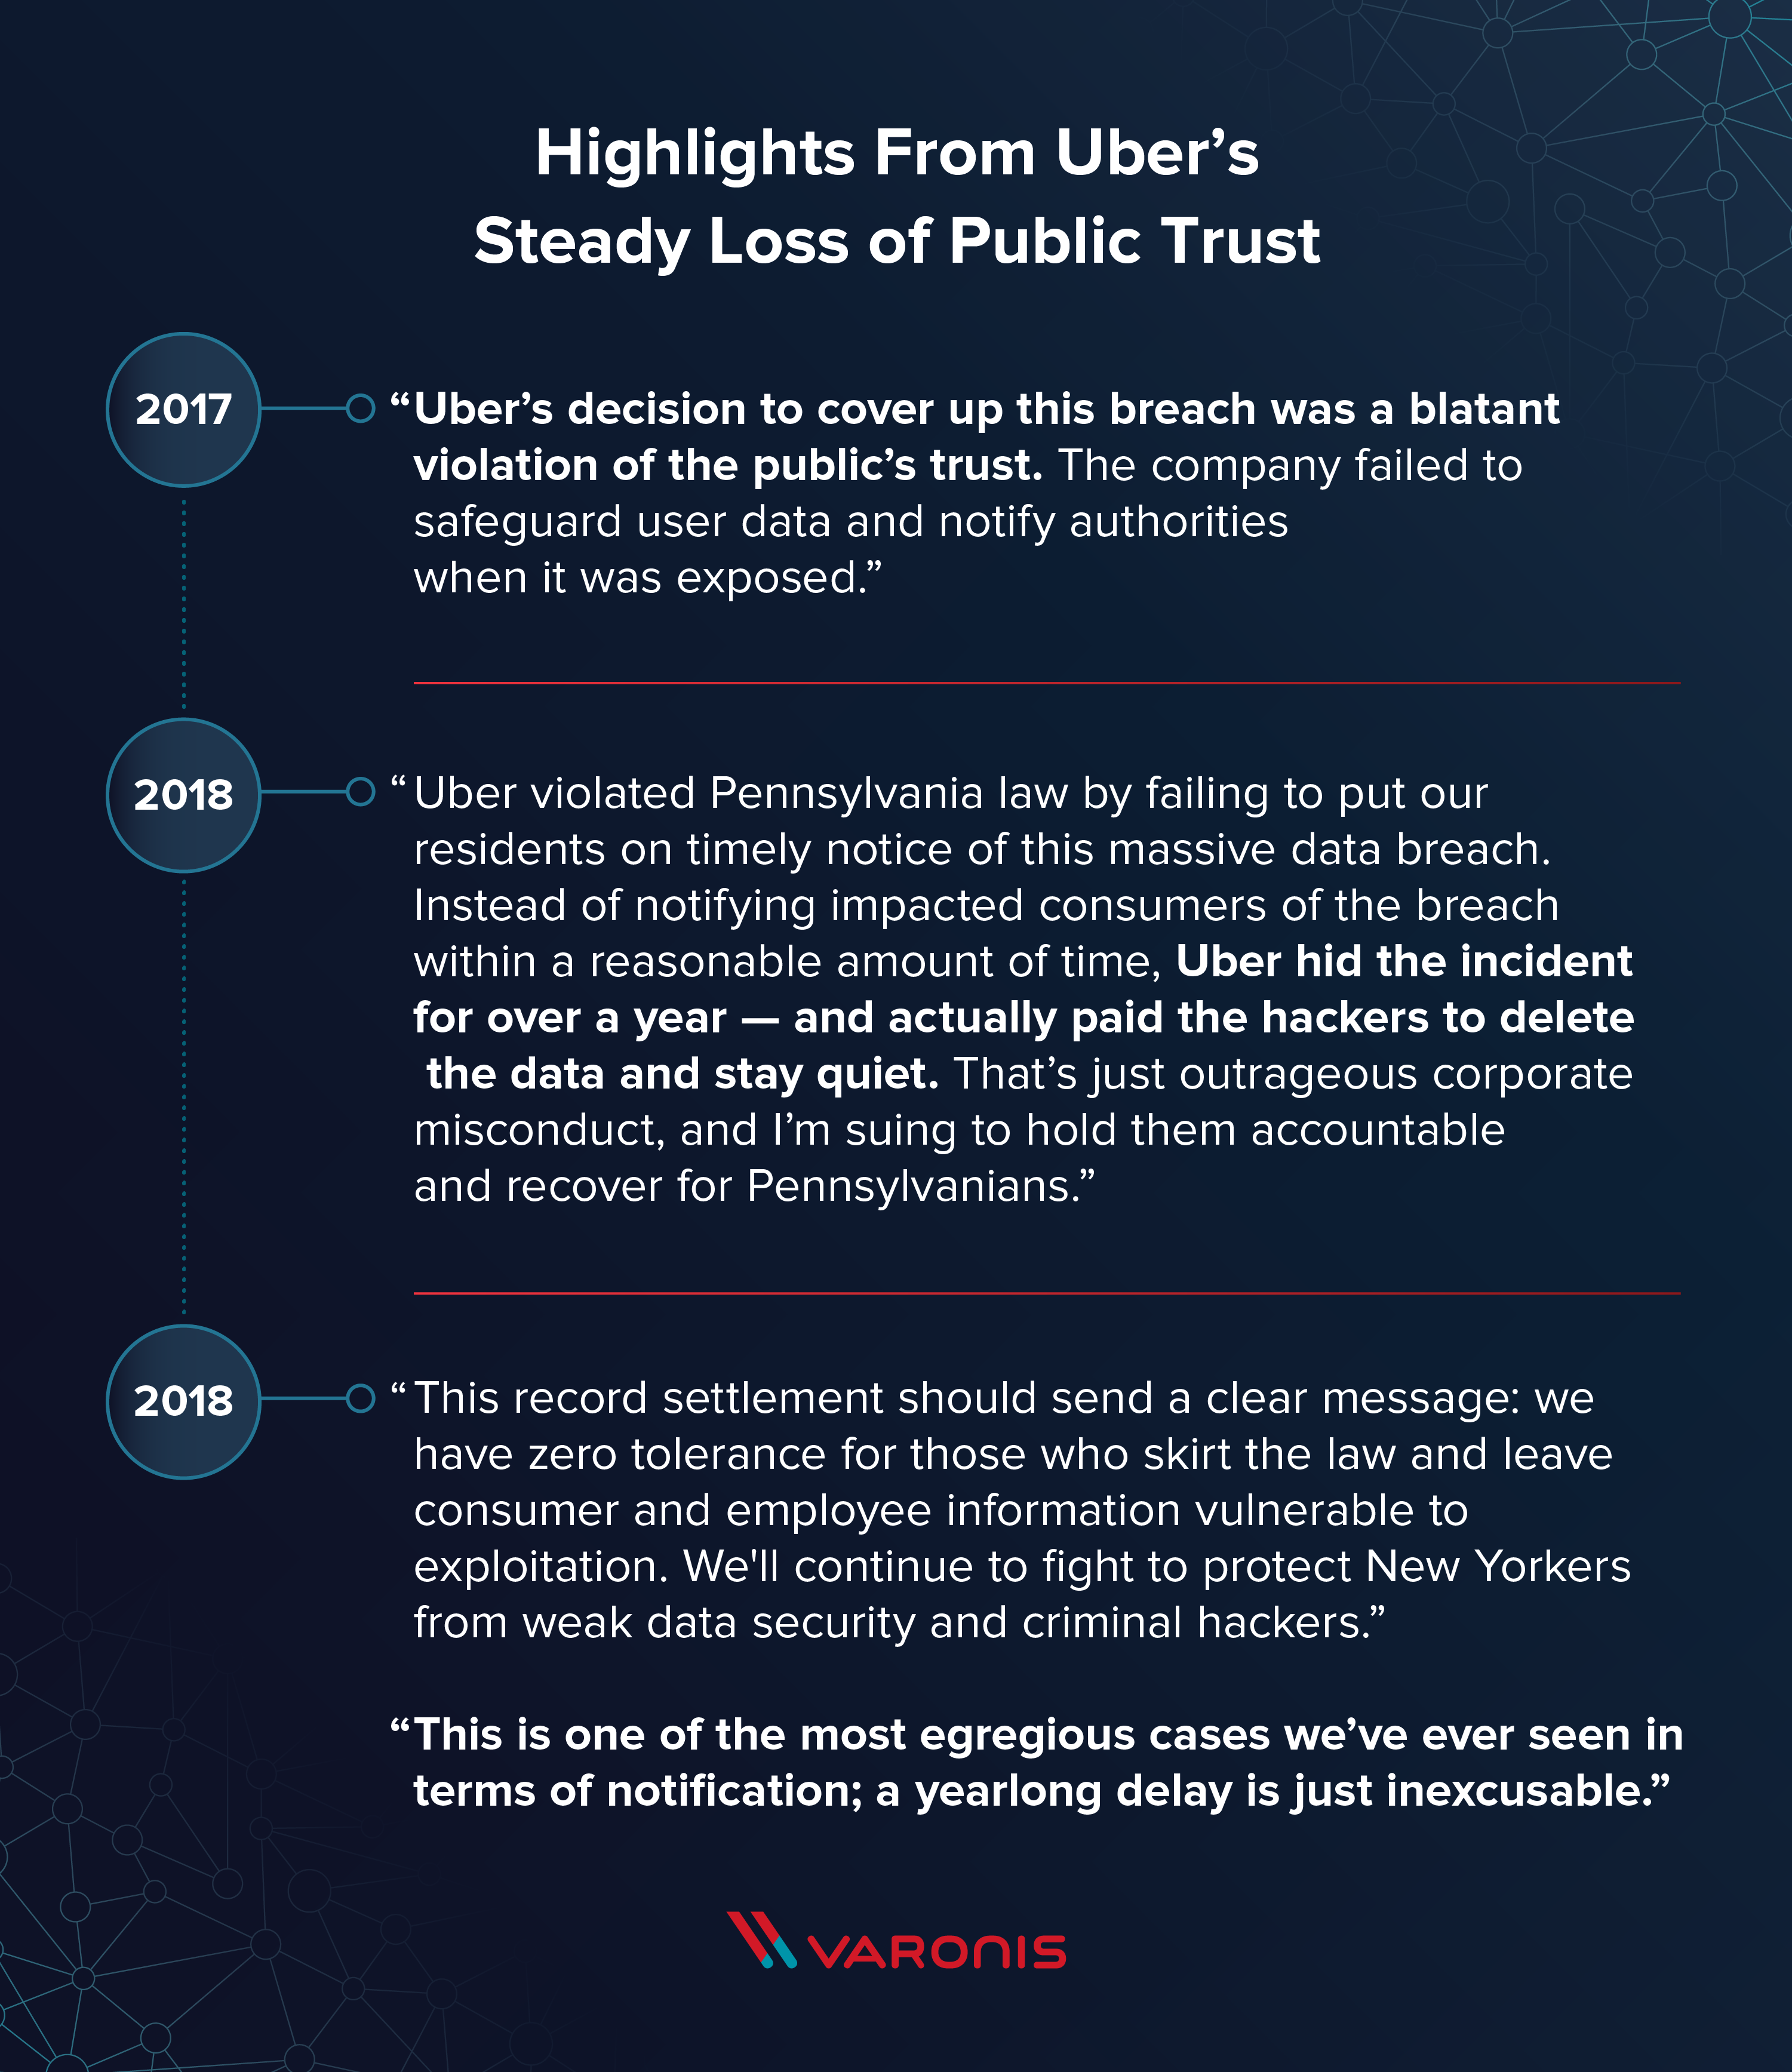 uber loss of public trust réputation